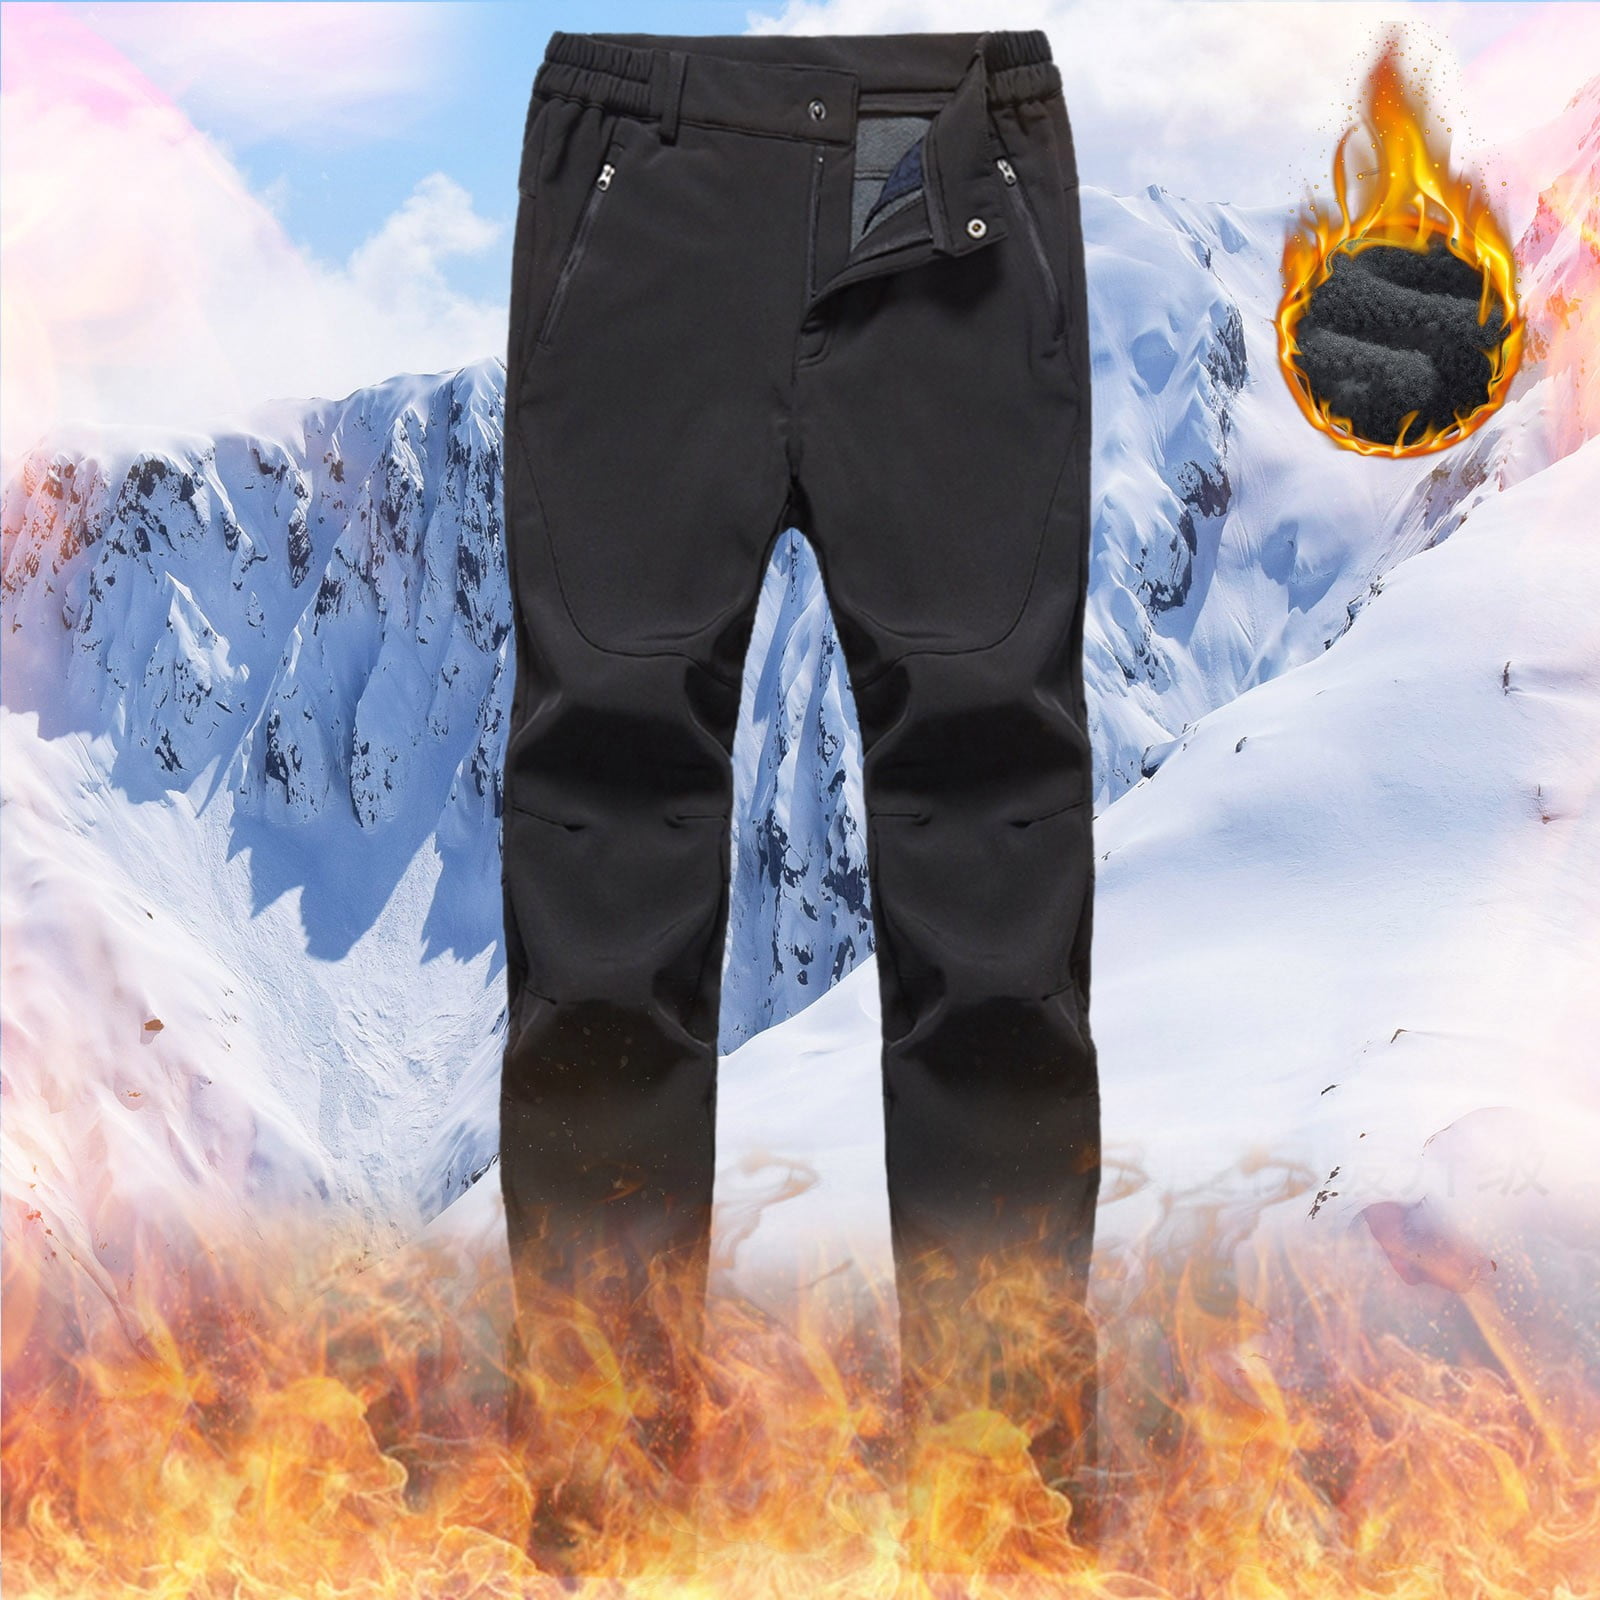 MAIER women's winter hiking pants TECH PANTS black 236008/900.38